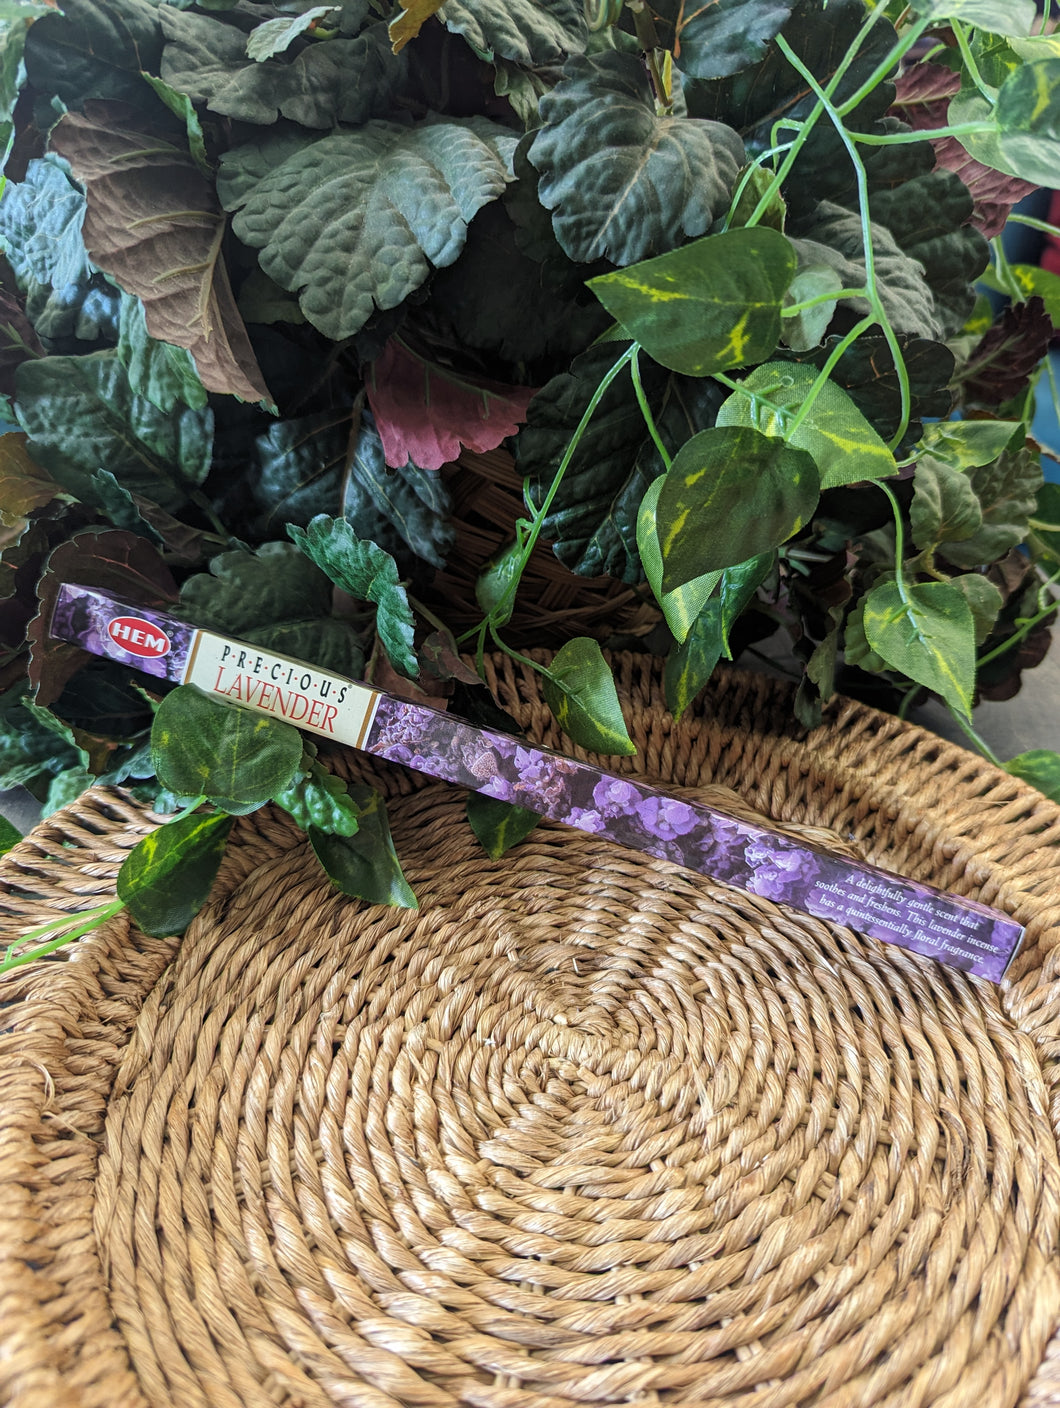 Precious Lavender Incense